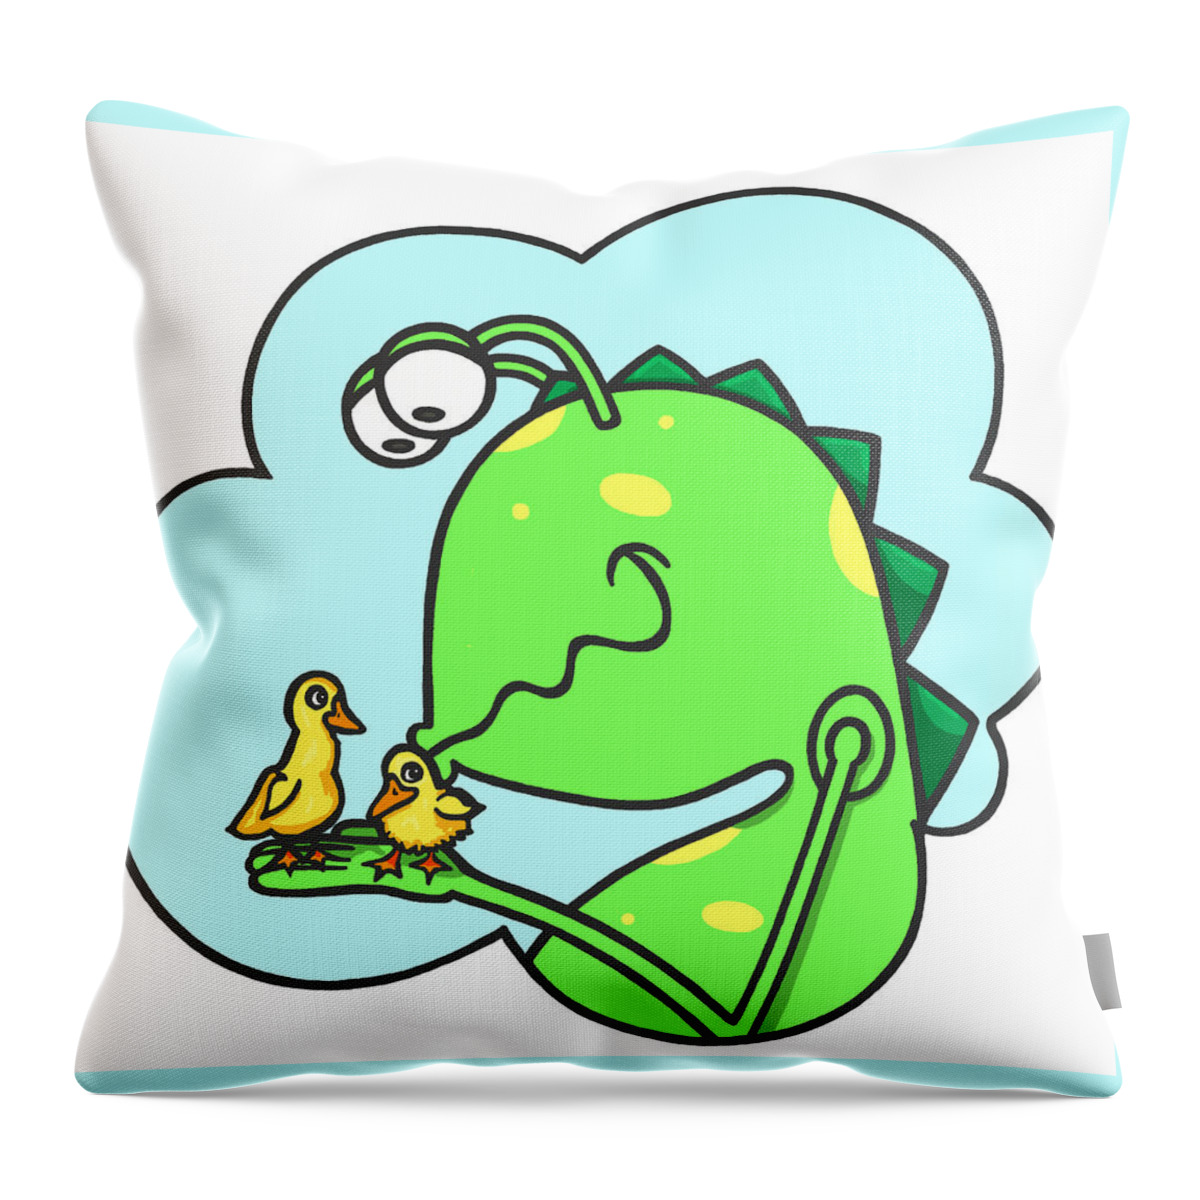 Duck Throw Pillow featuring the digital art Monster kissing ducklings by Konni Jensen